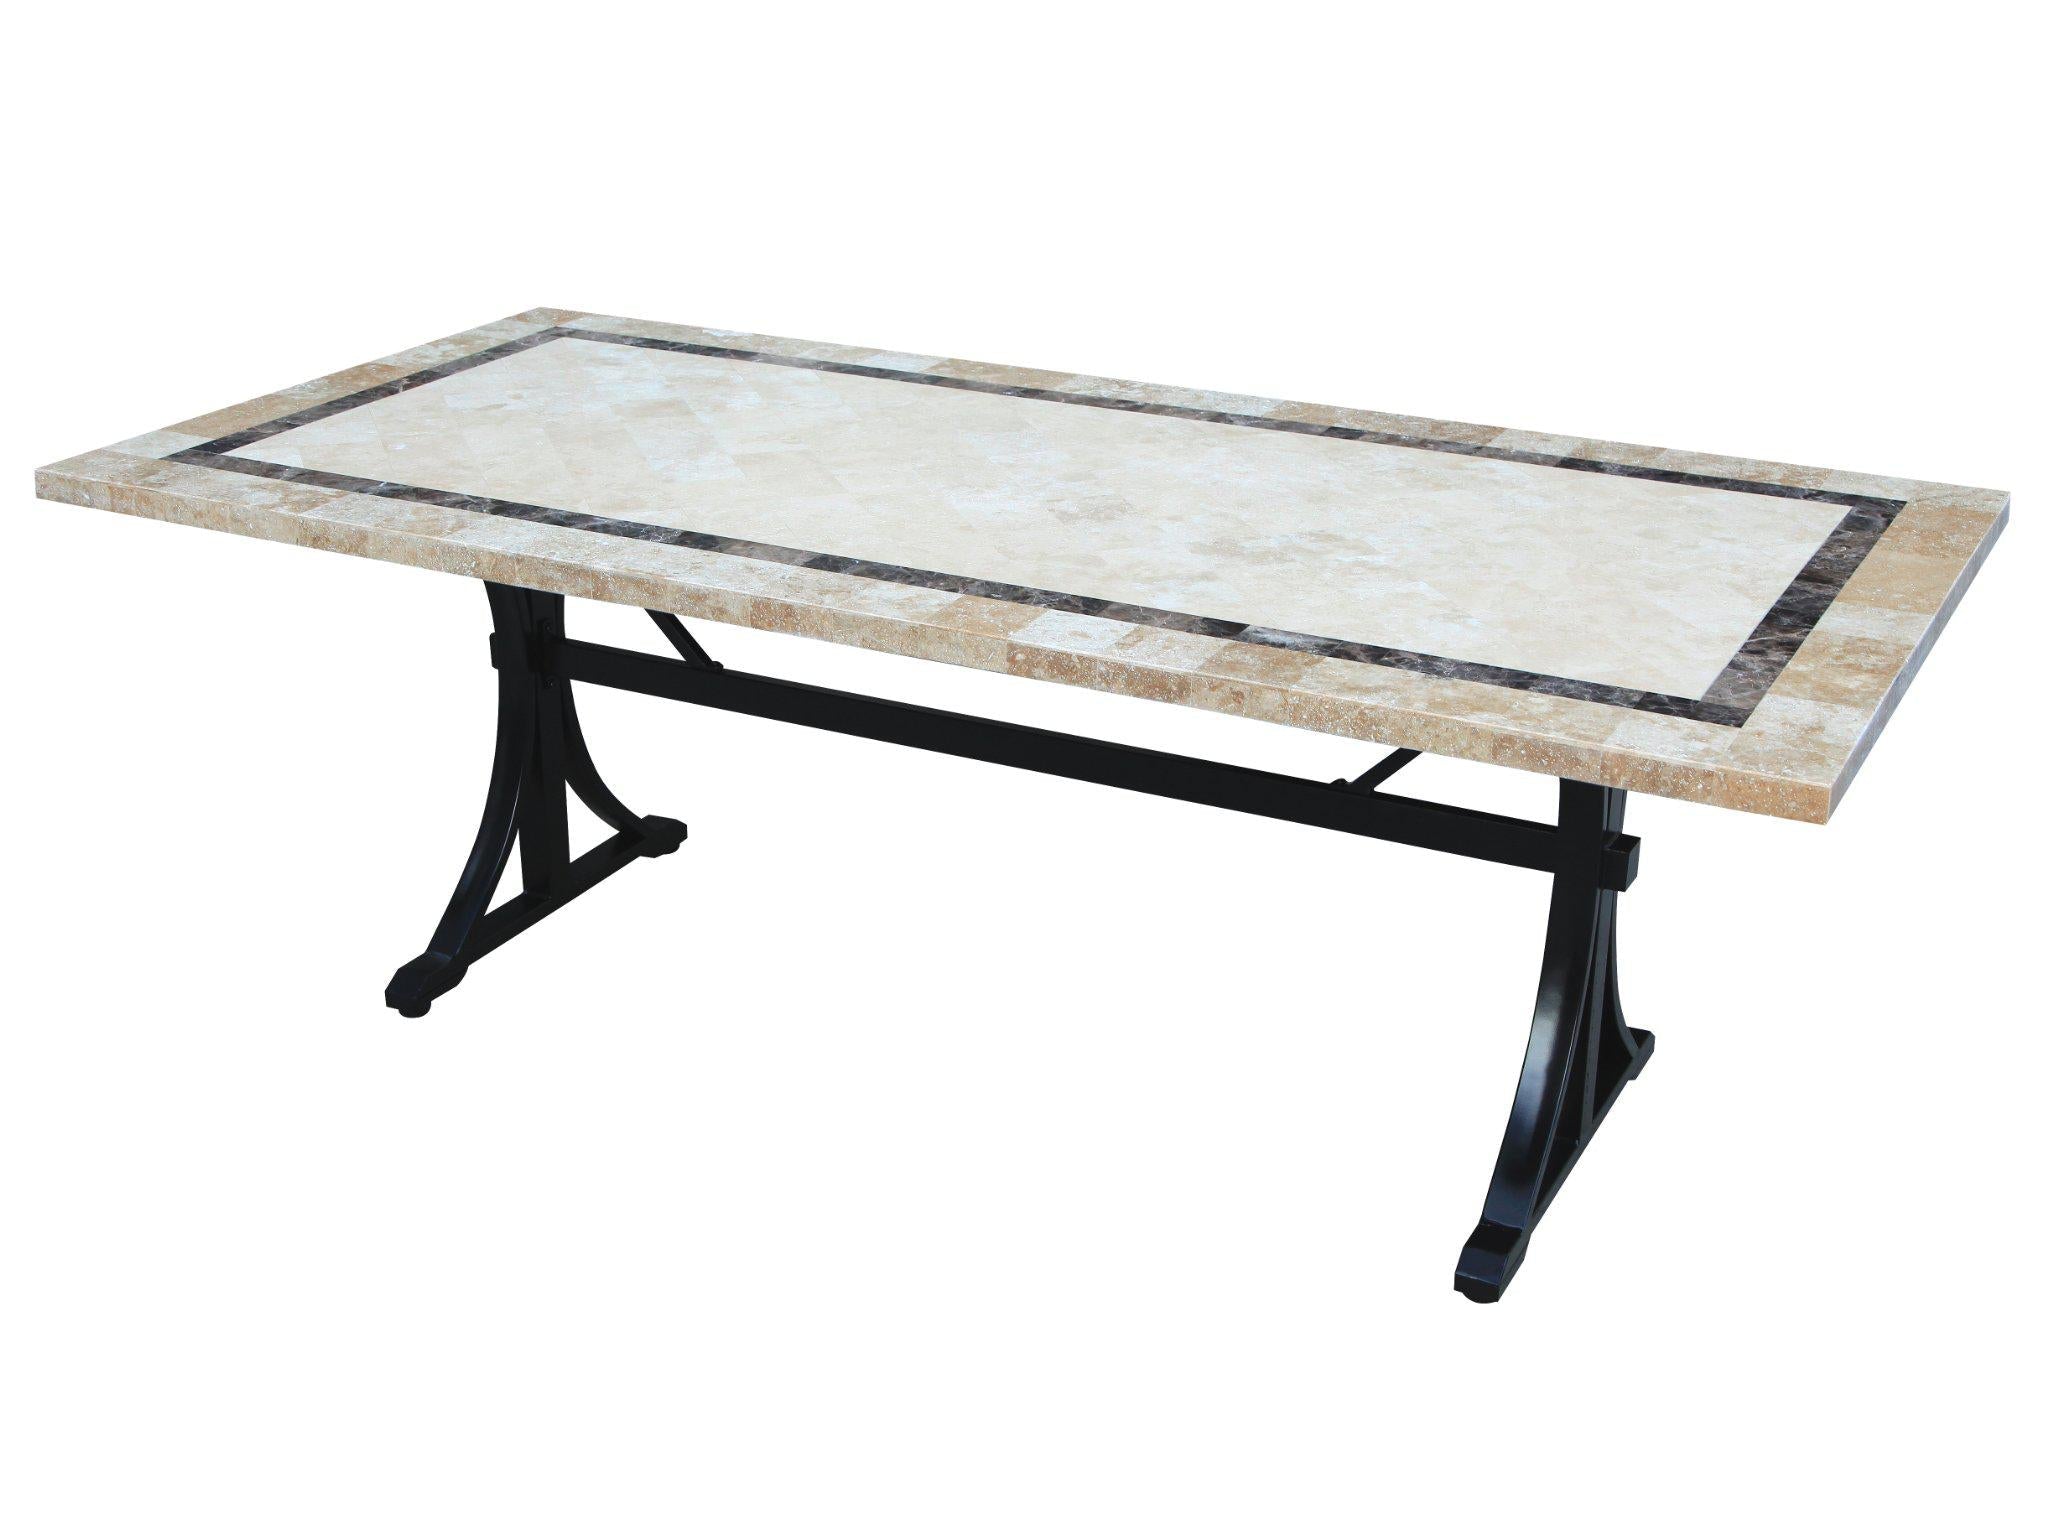 FurnitureOkay Stone Outdoor Dining Table (210x100cm)